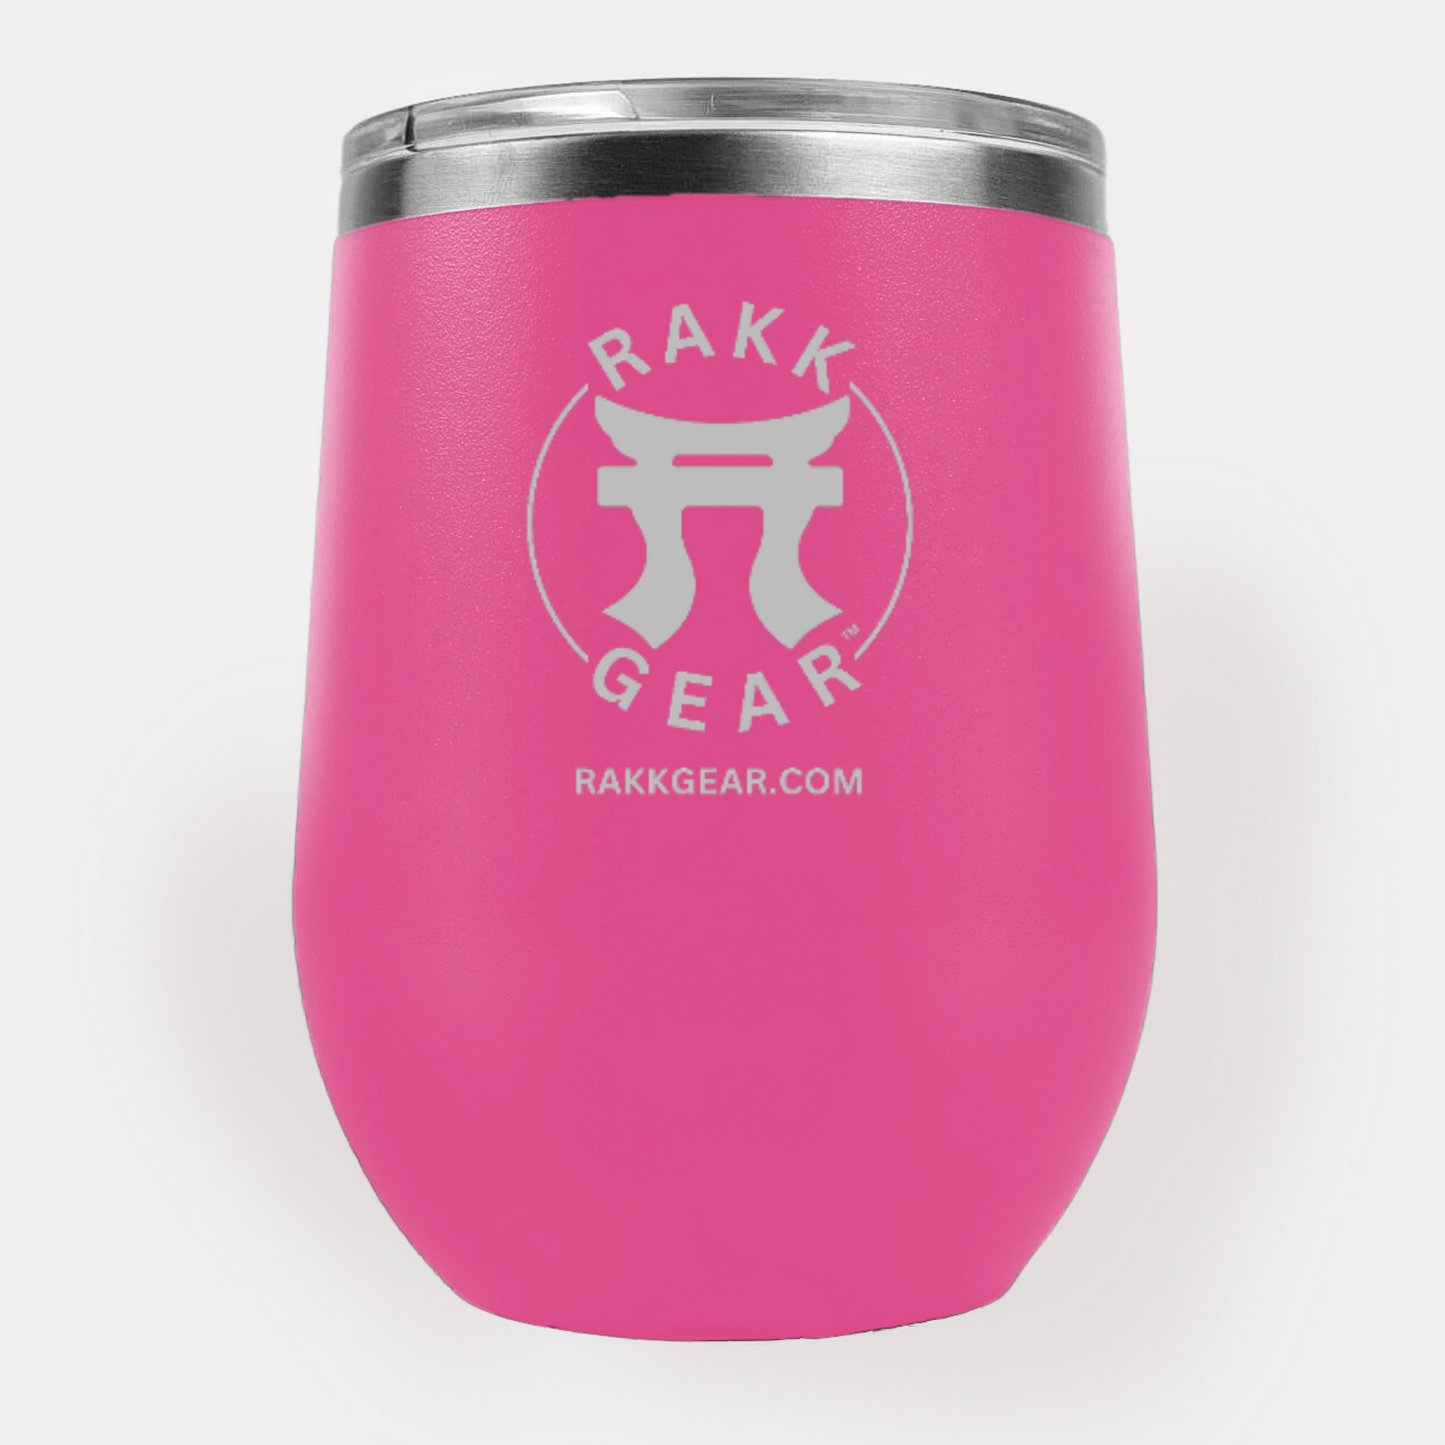 "Pink Stainless Steel Laser Etched Wine Holder by Rakkgear, showcasing the Rakkgear logo – a sleek and elegant wine accessory."